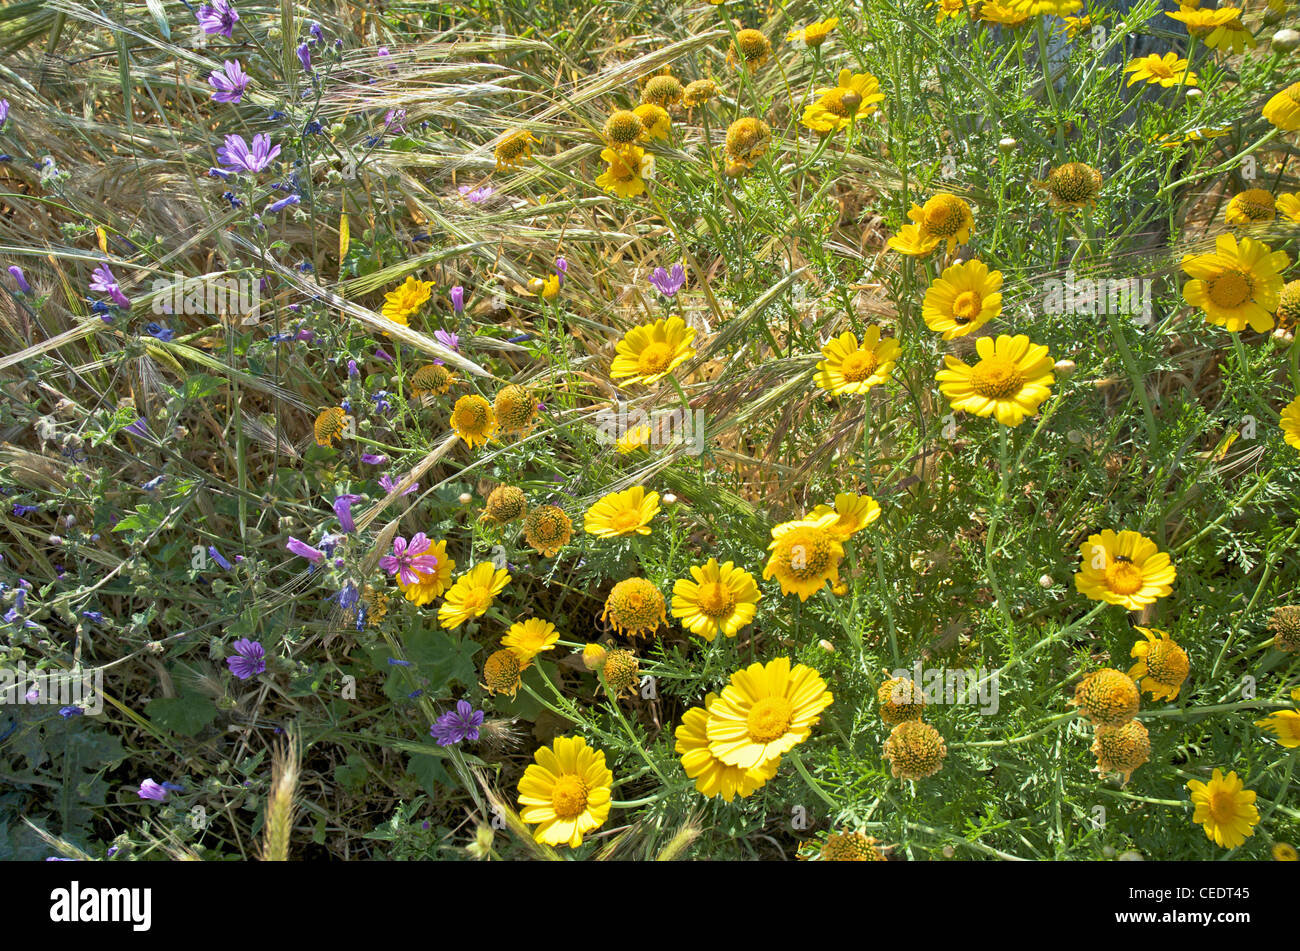 Greece, Lemnos island, Myrina, yellow daisies and purple wildflowers, close-up Stock Photo